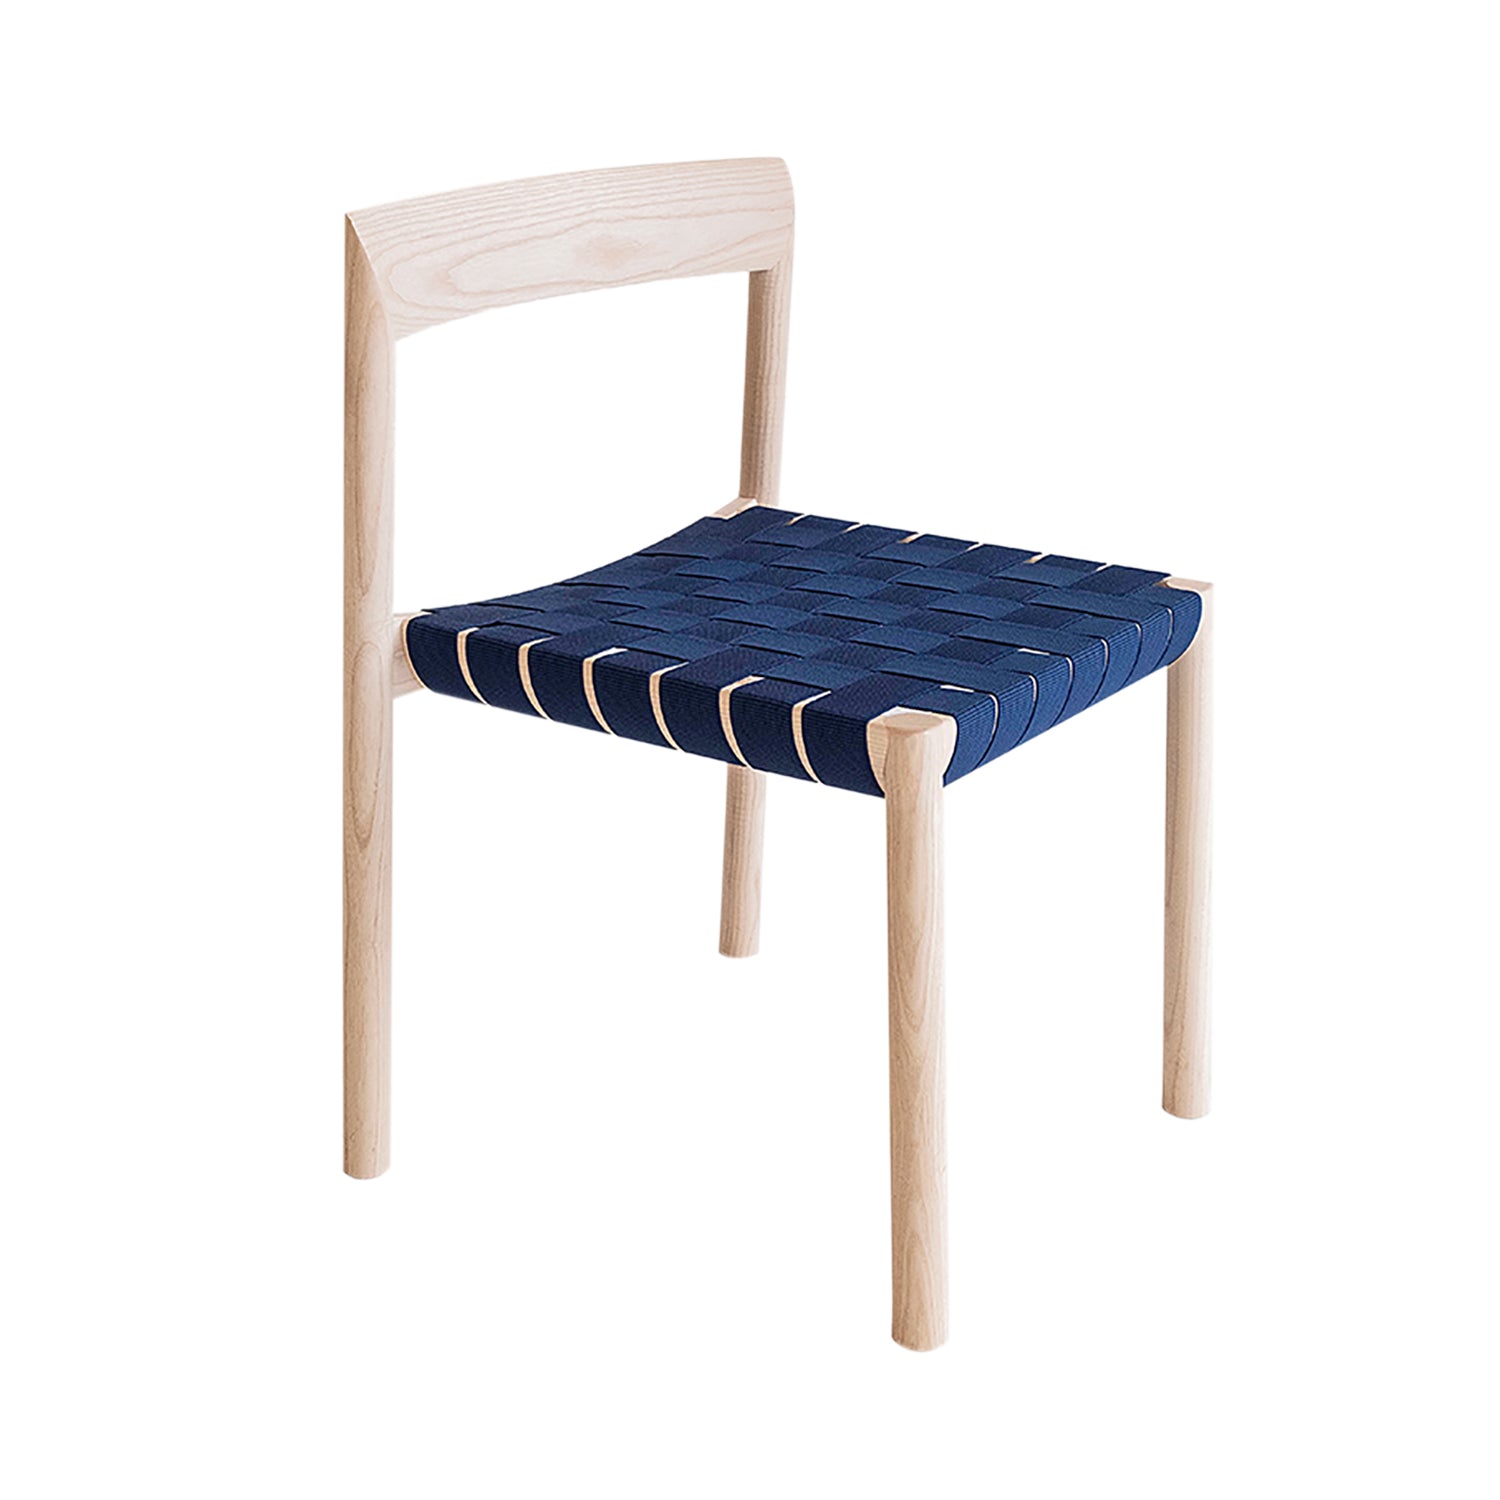 Stax Chair: Webbing Seat + Ash + Navy